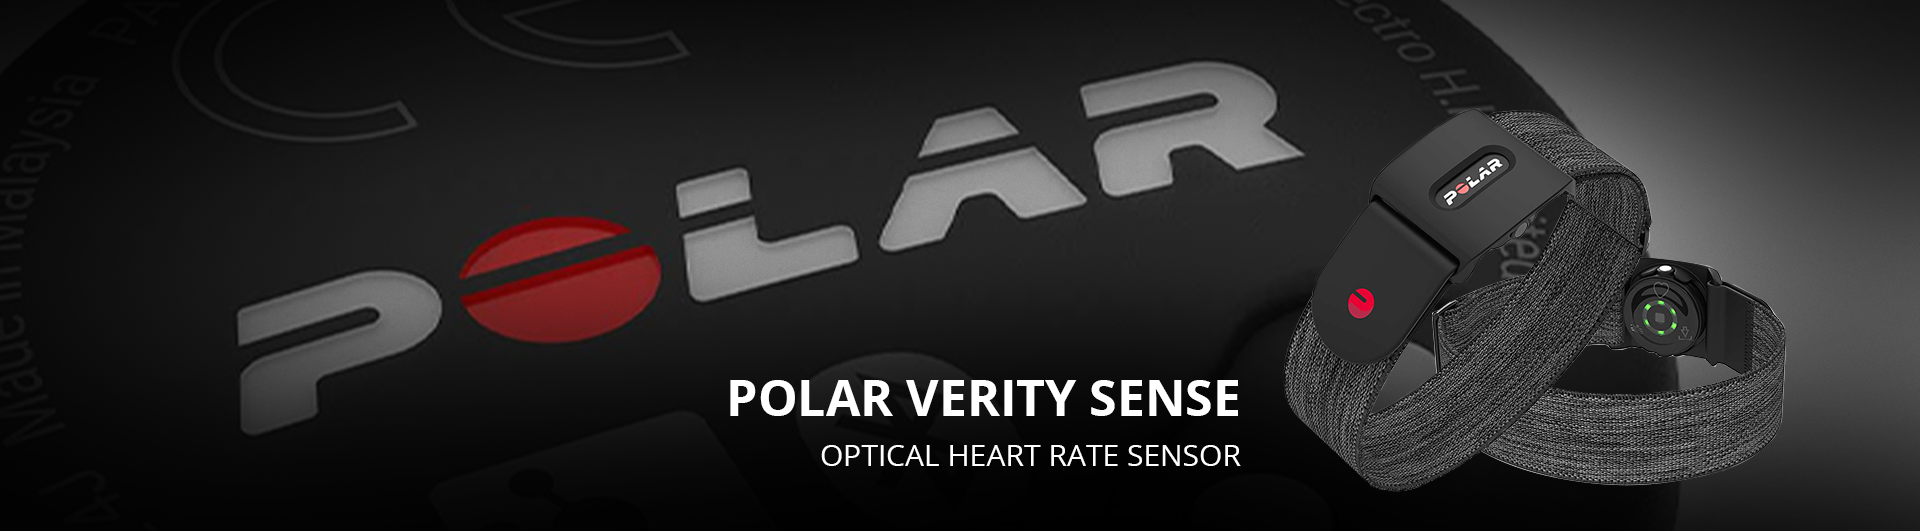 Polar Verity Sense Heart Rate Monitor - Grey